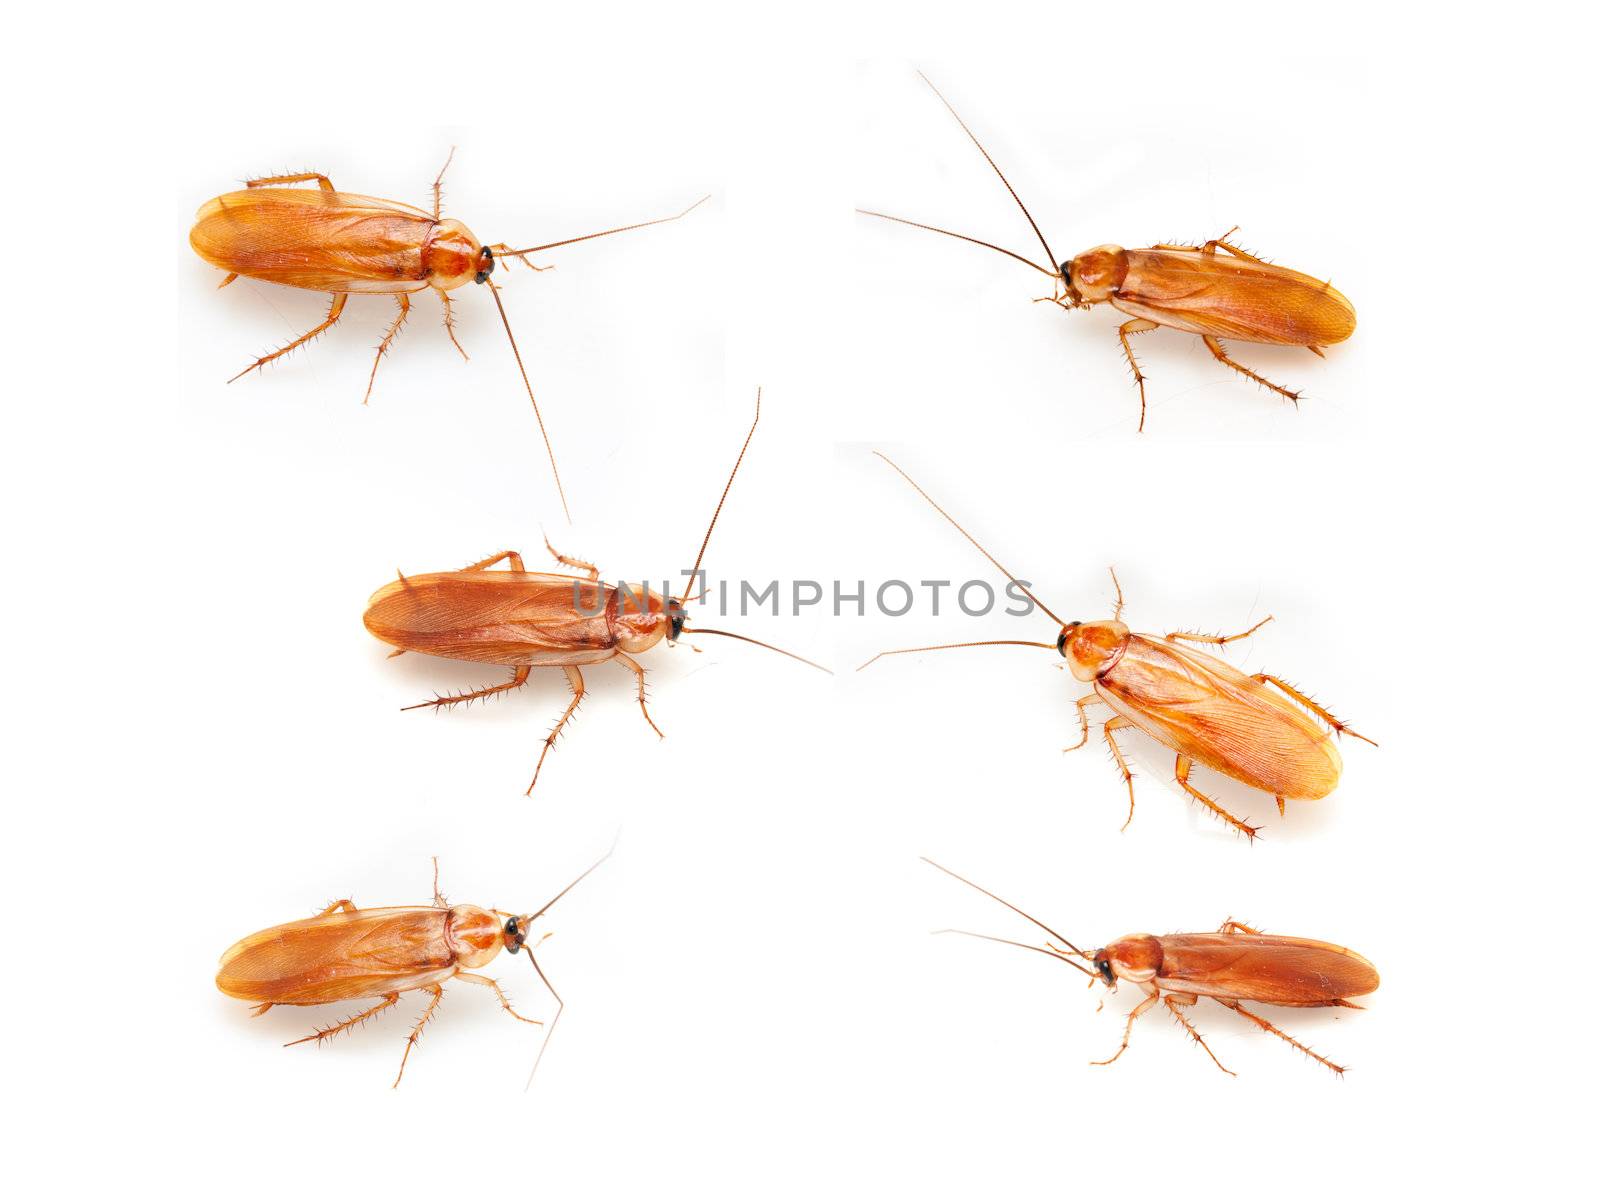 cockroach on a white background by schankz